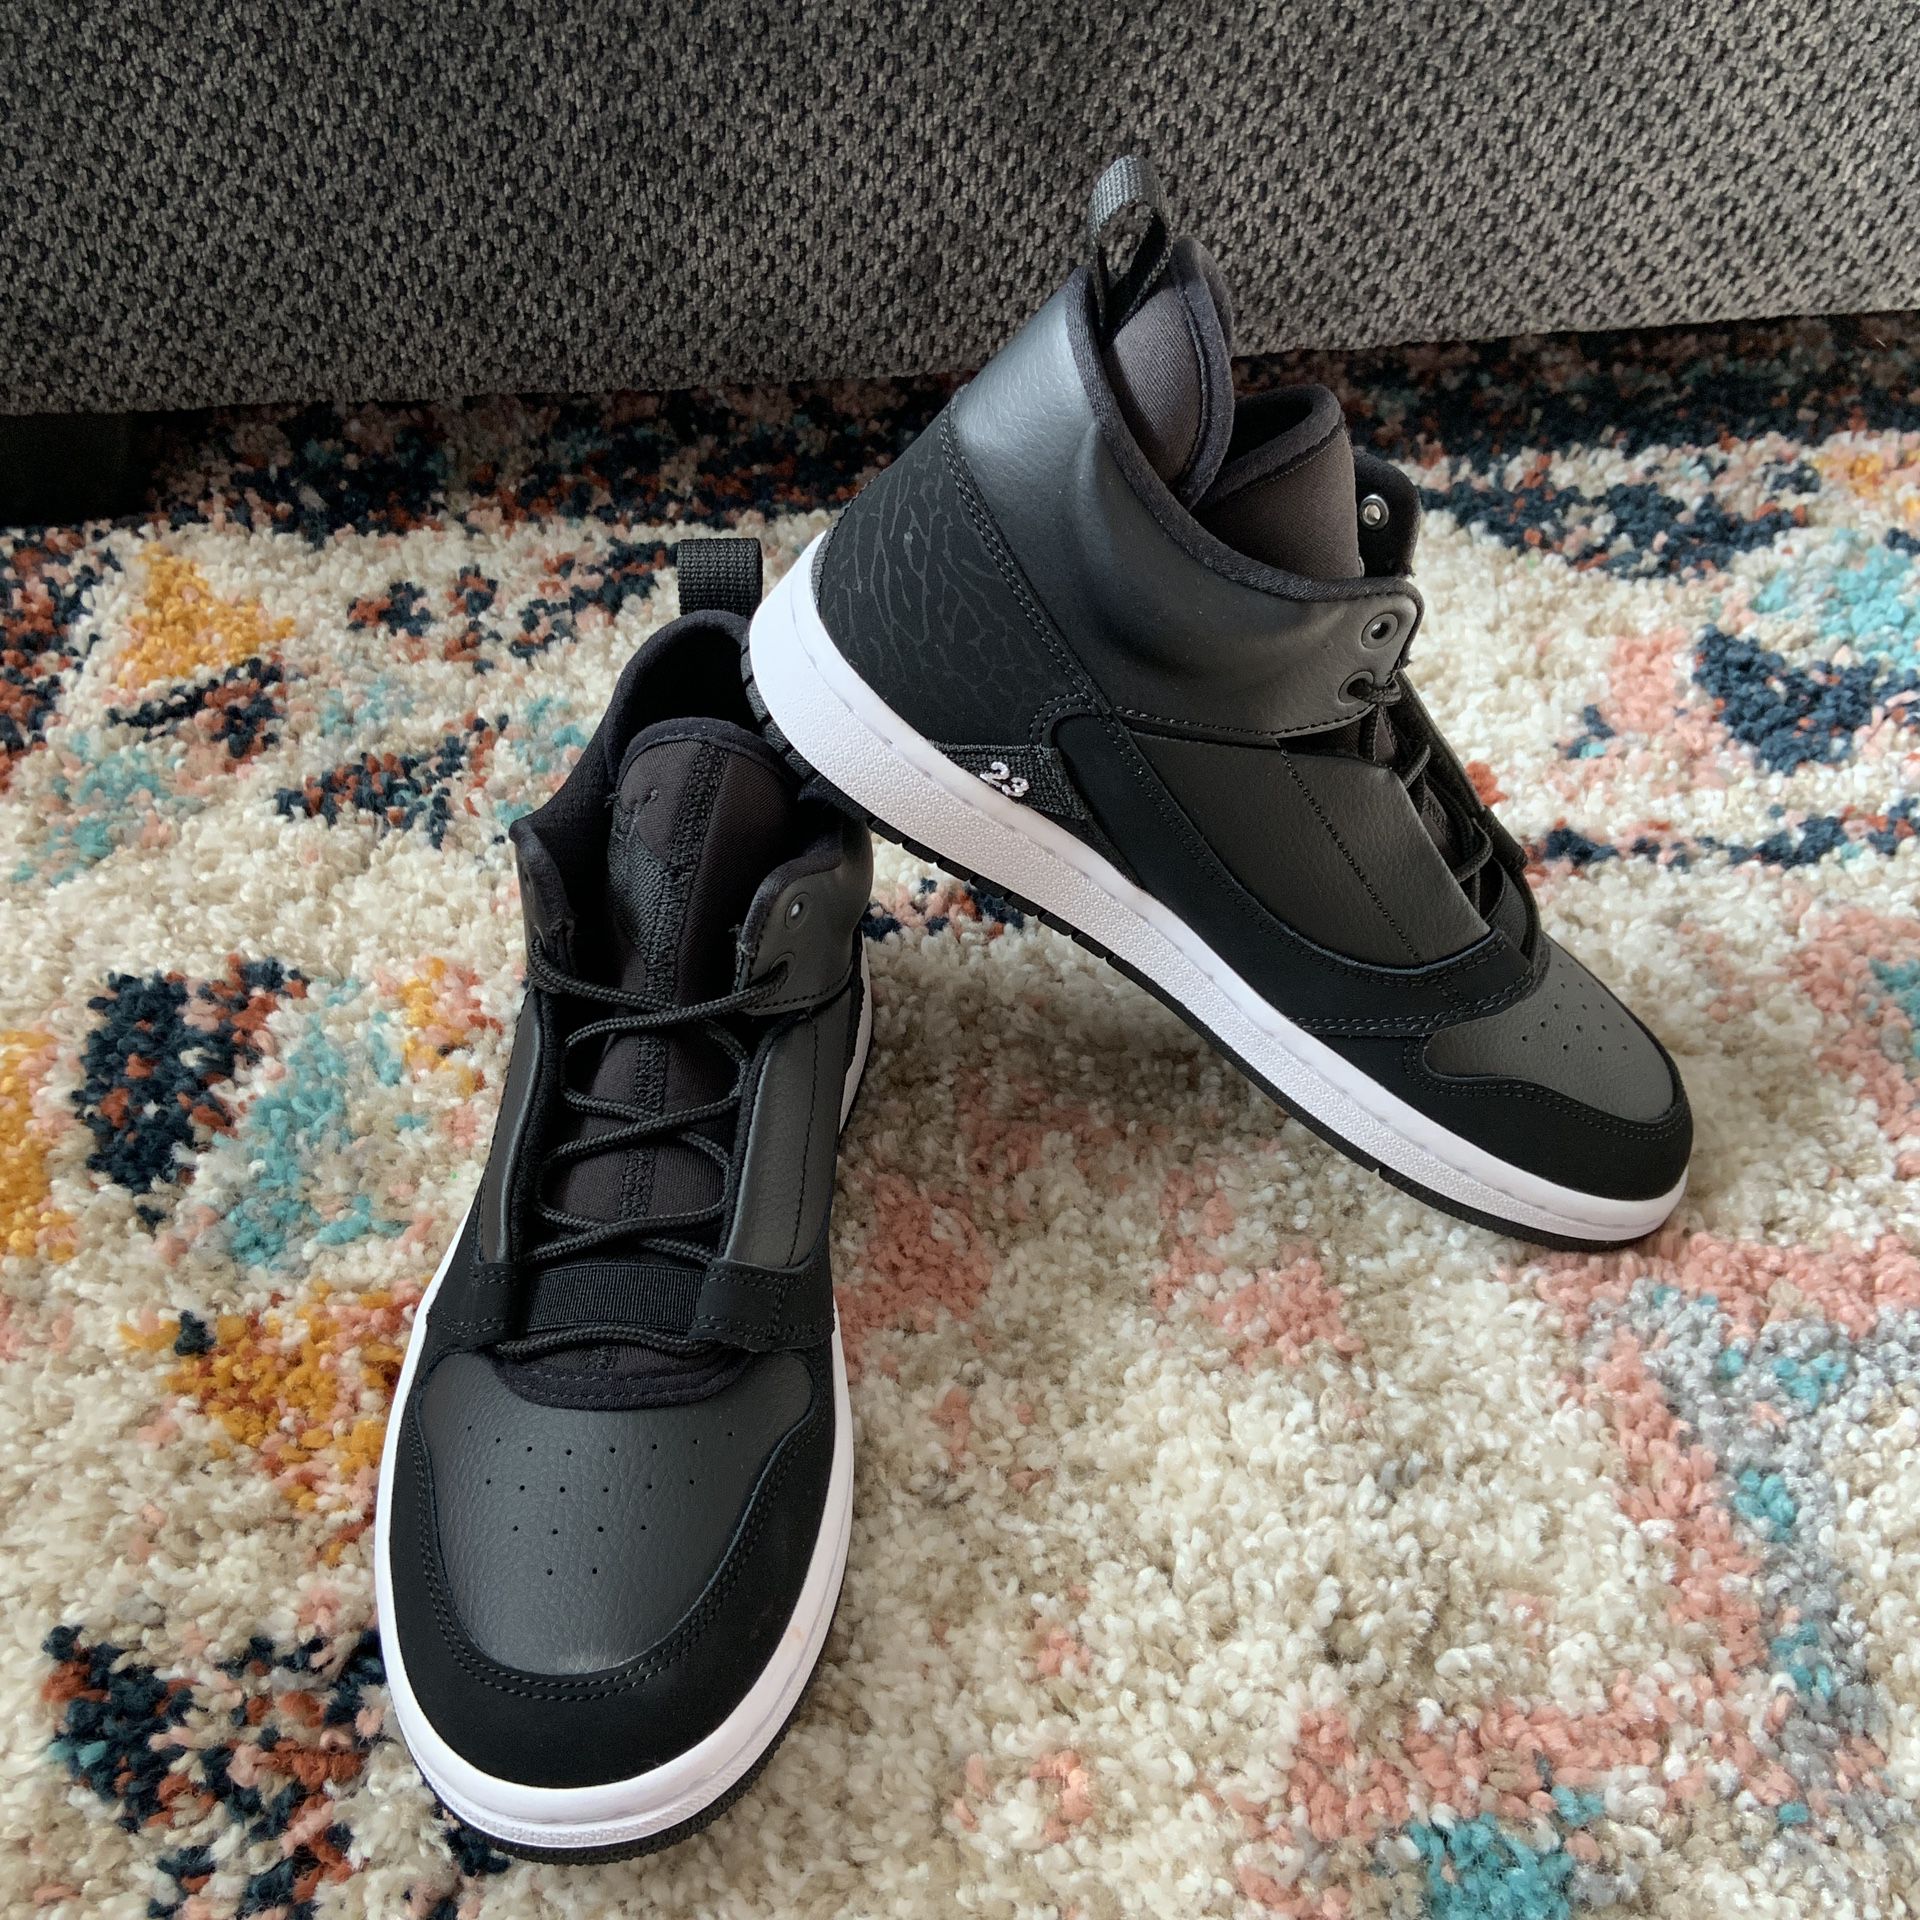 NWOB Nike Jordan Fadeaway GS Sneakers. Size 6 Youth / 7.5 Women's